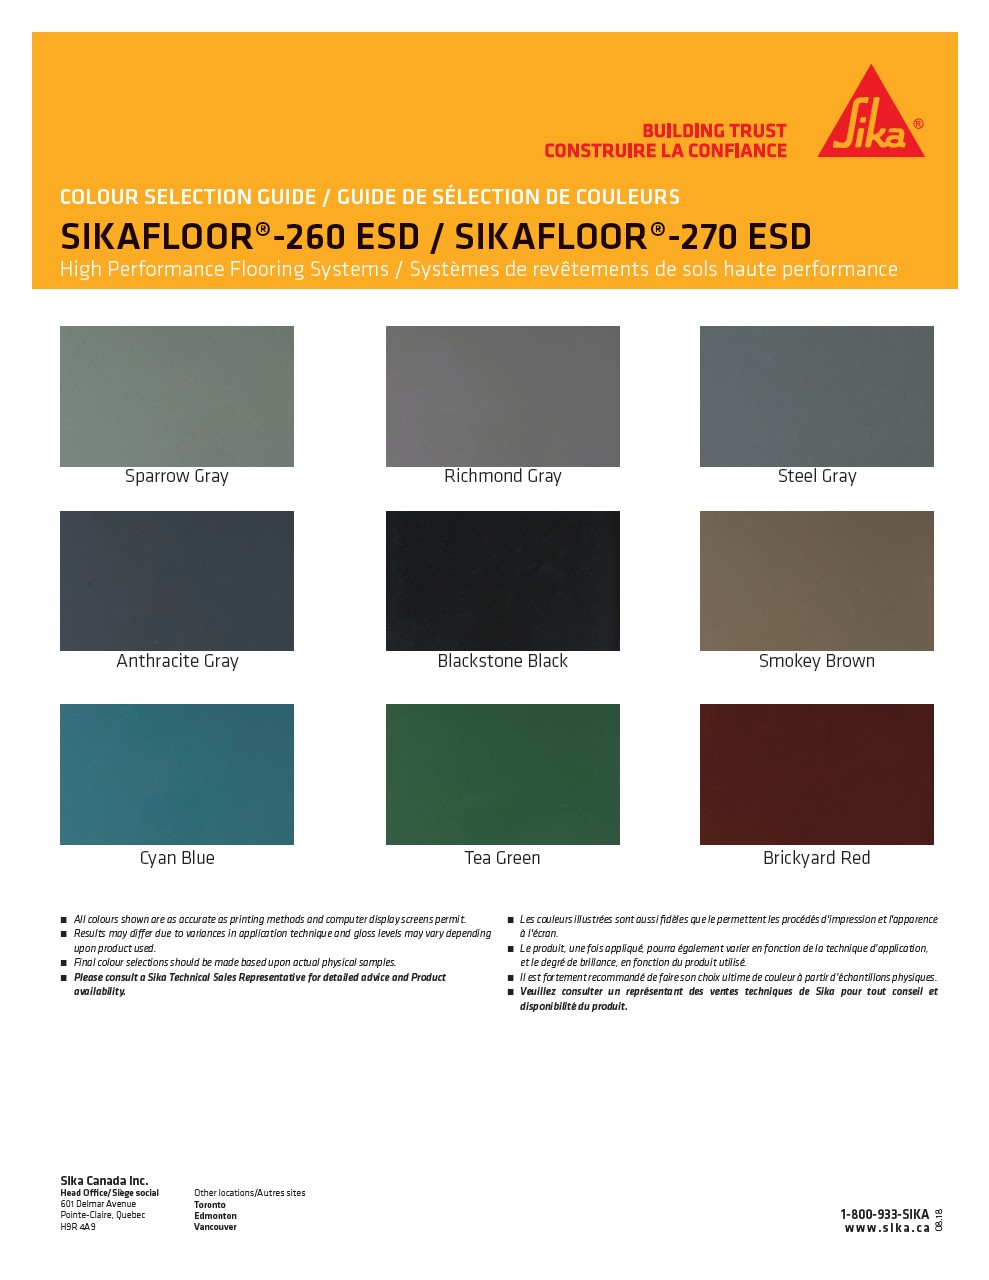 Guide de couleurs - Sikafloor ESD